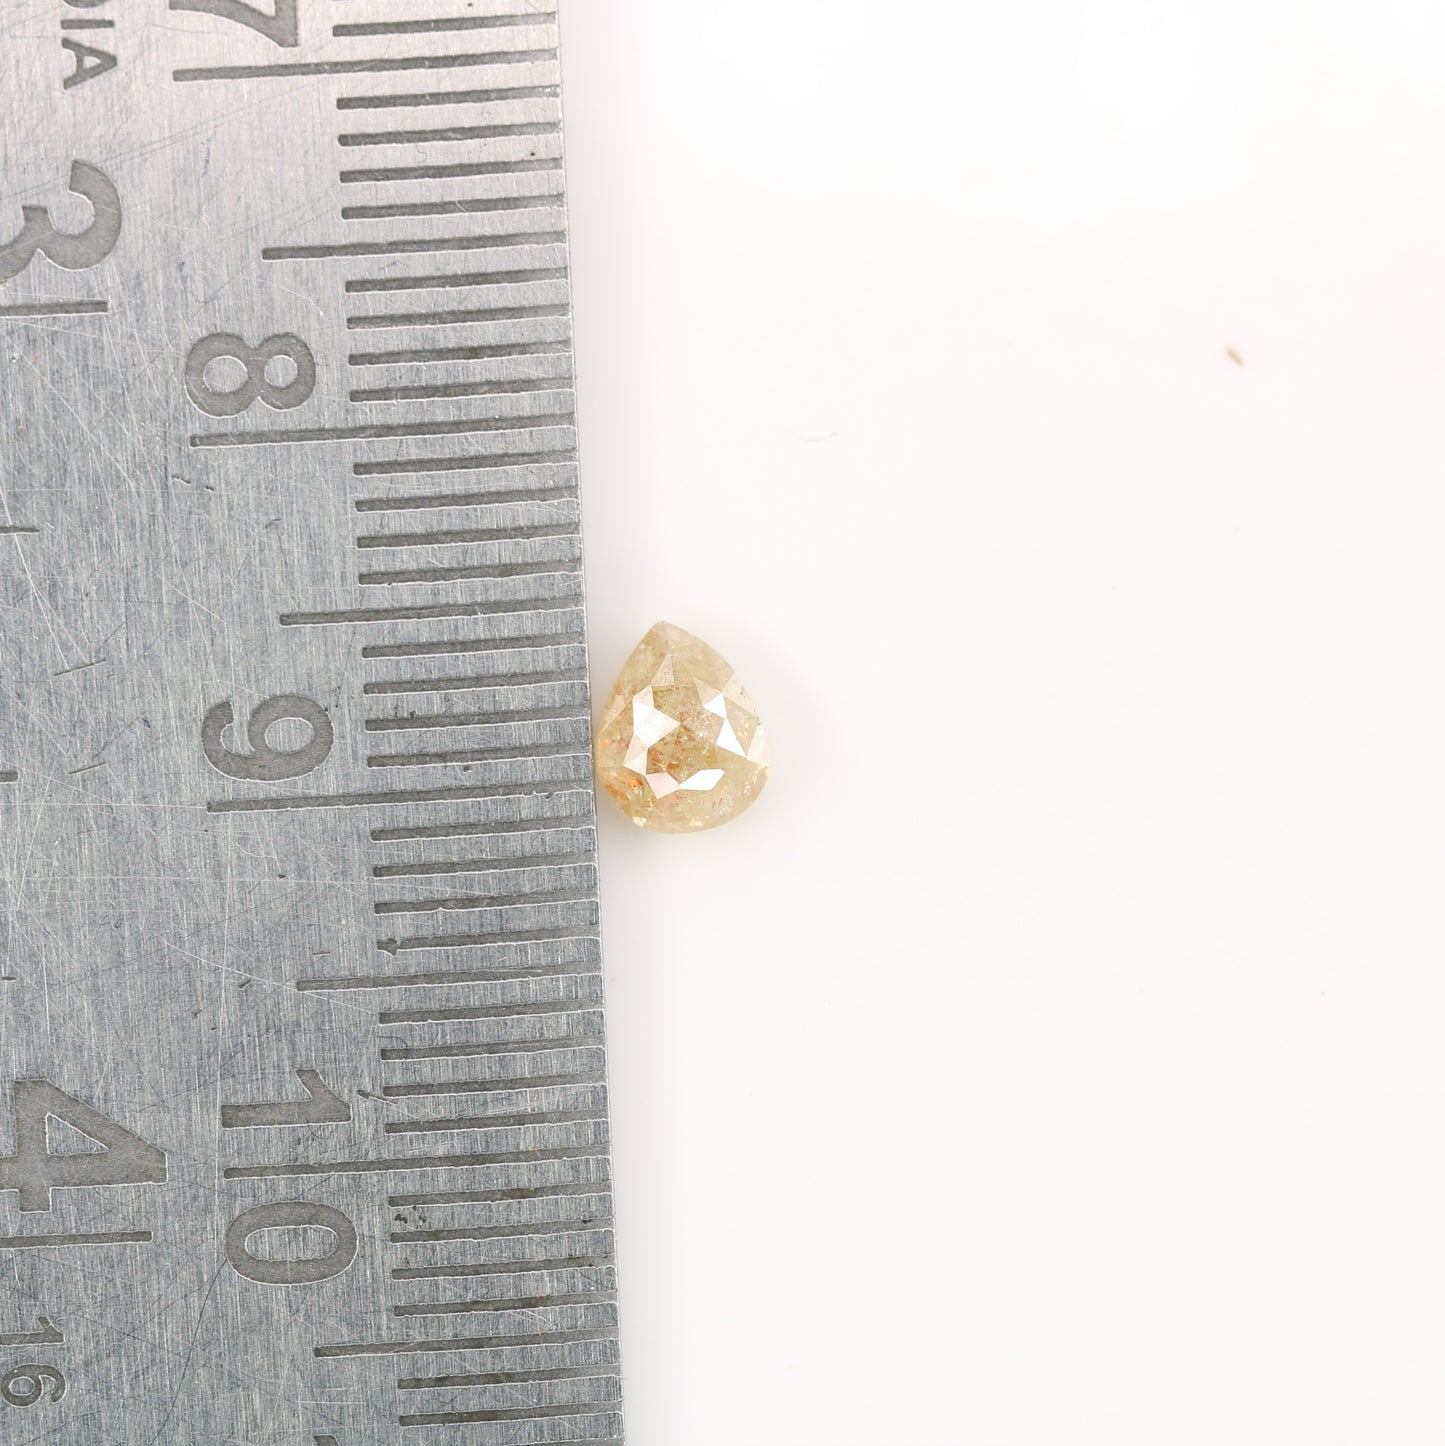 0.73 CT Pear Cut Peach Diamond For Engagement Ring | Peach Pear Natural Loose Diamond For Sale